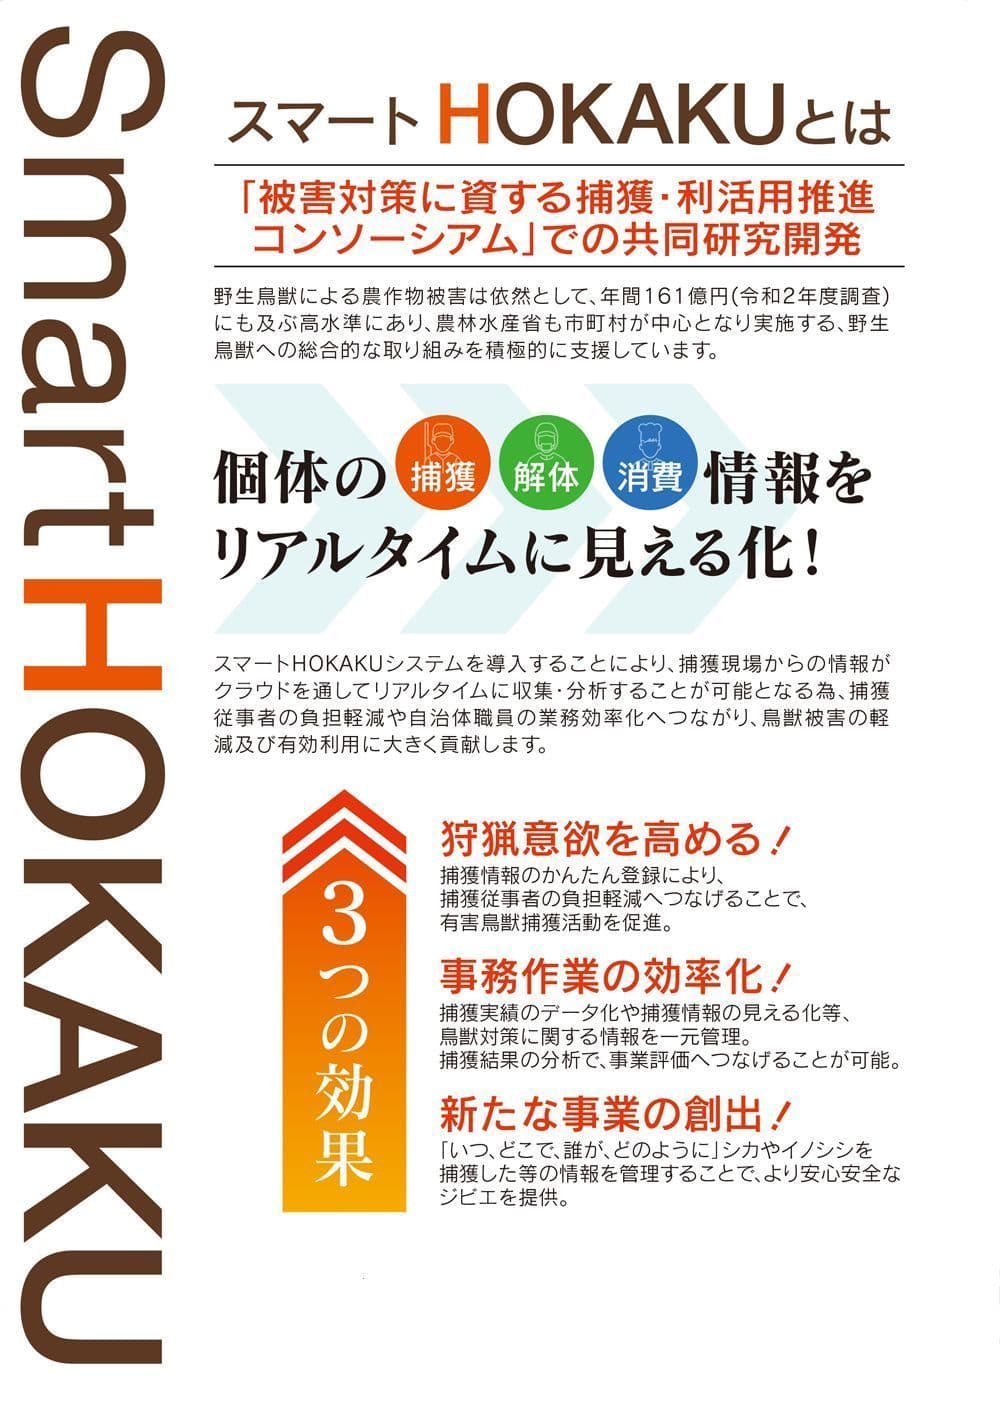 Smart HOKAKU overview1 image